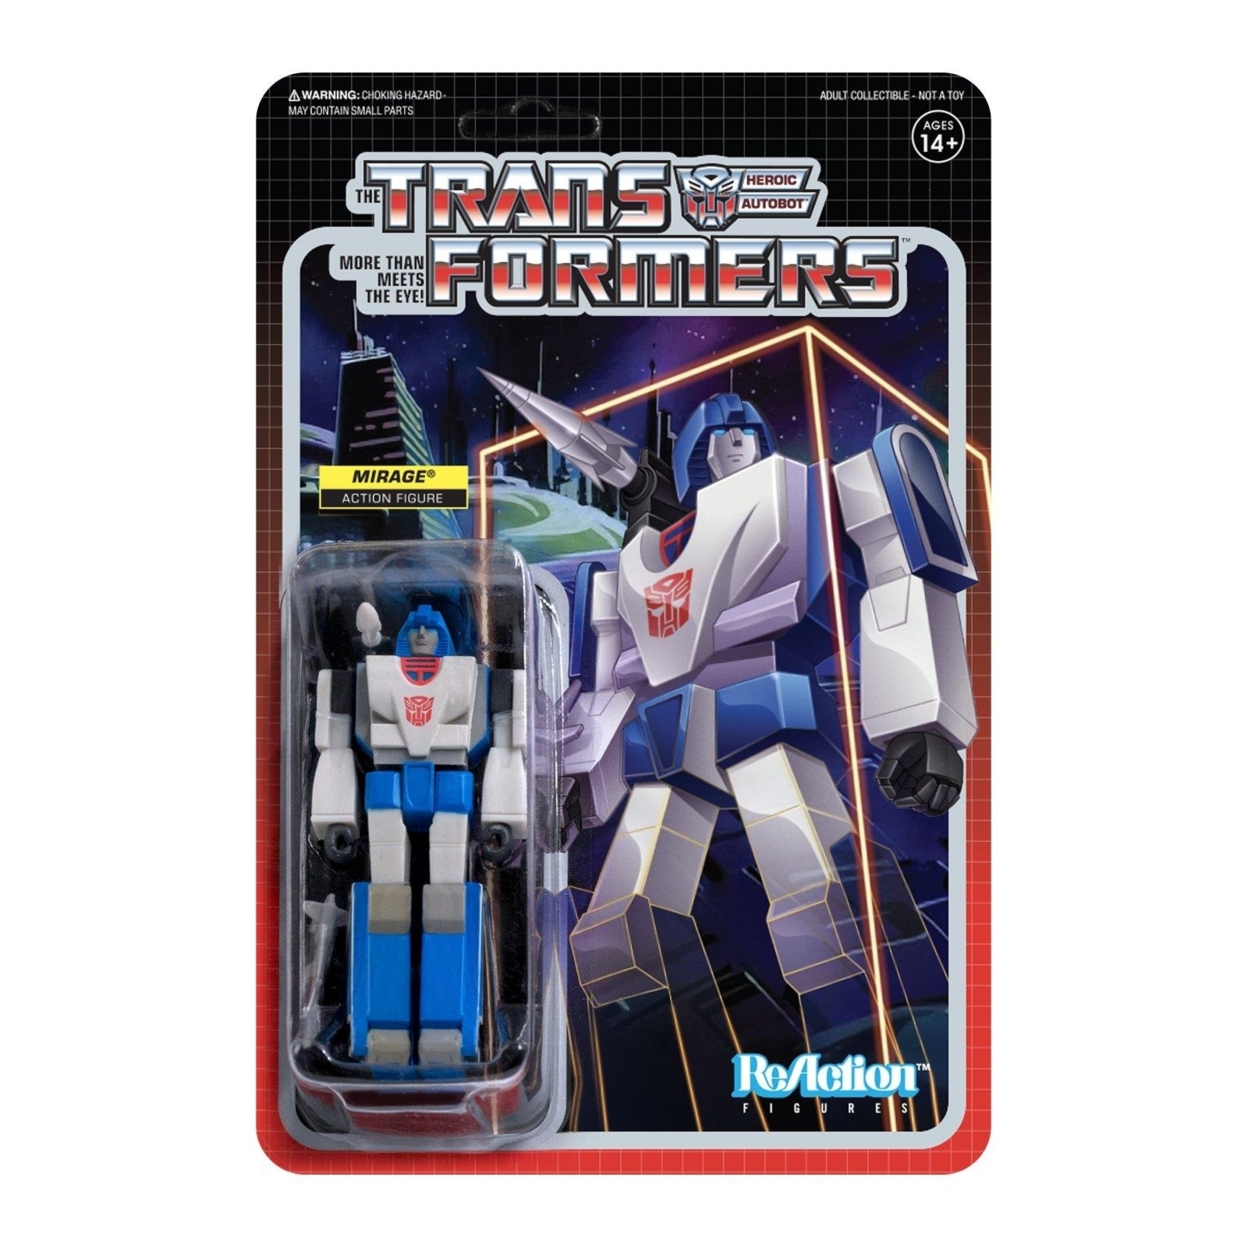 Transformers Mirage ReAction Figure Autobot Retro W/ Blaster Accessory Super7